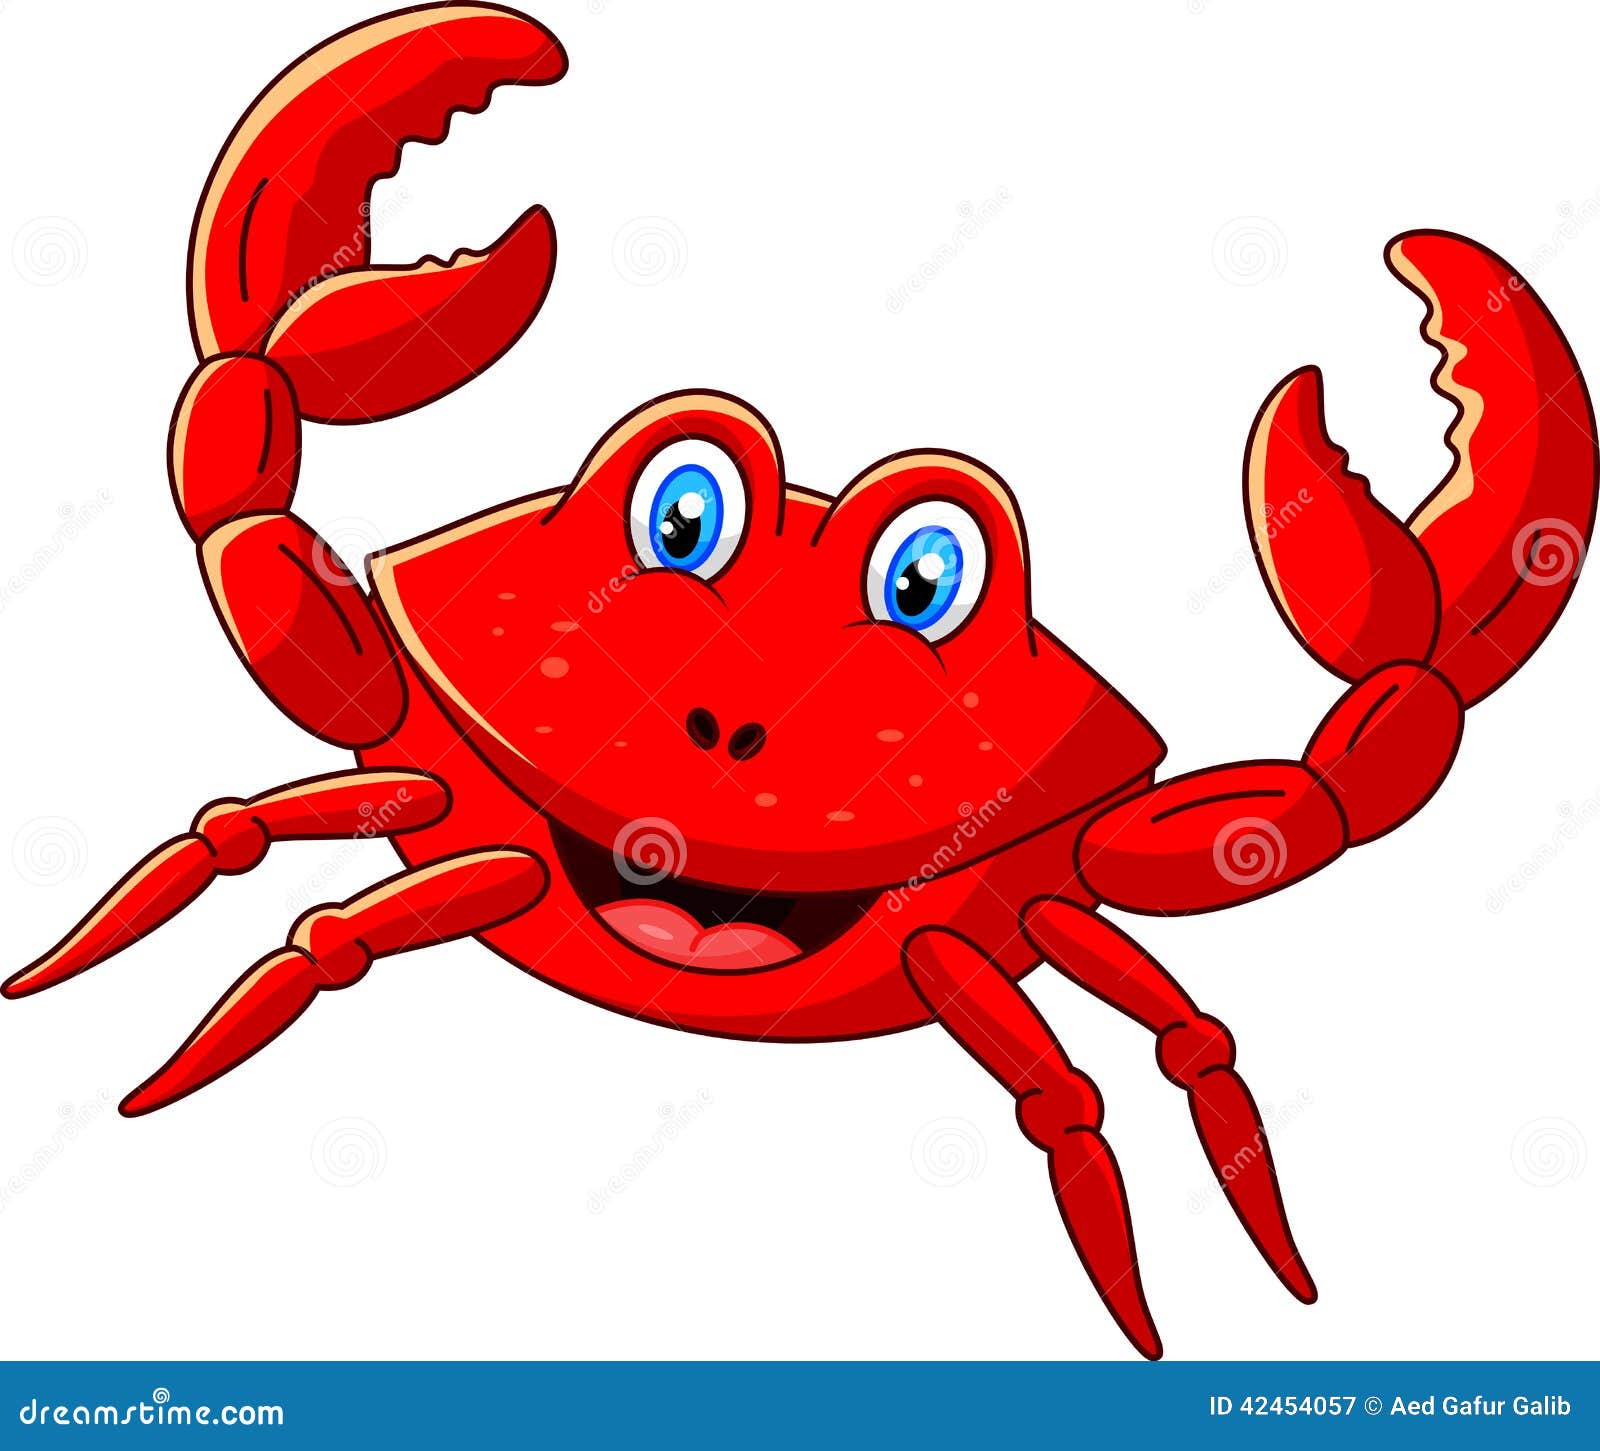 crab legs clipart - photo #33